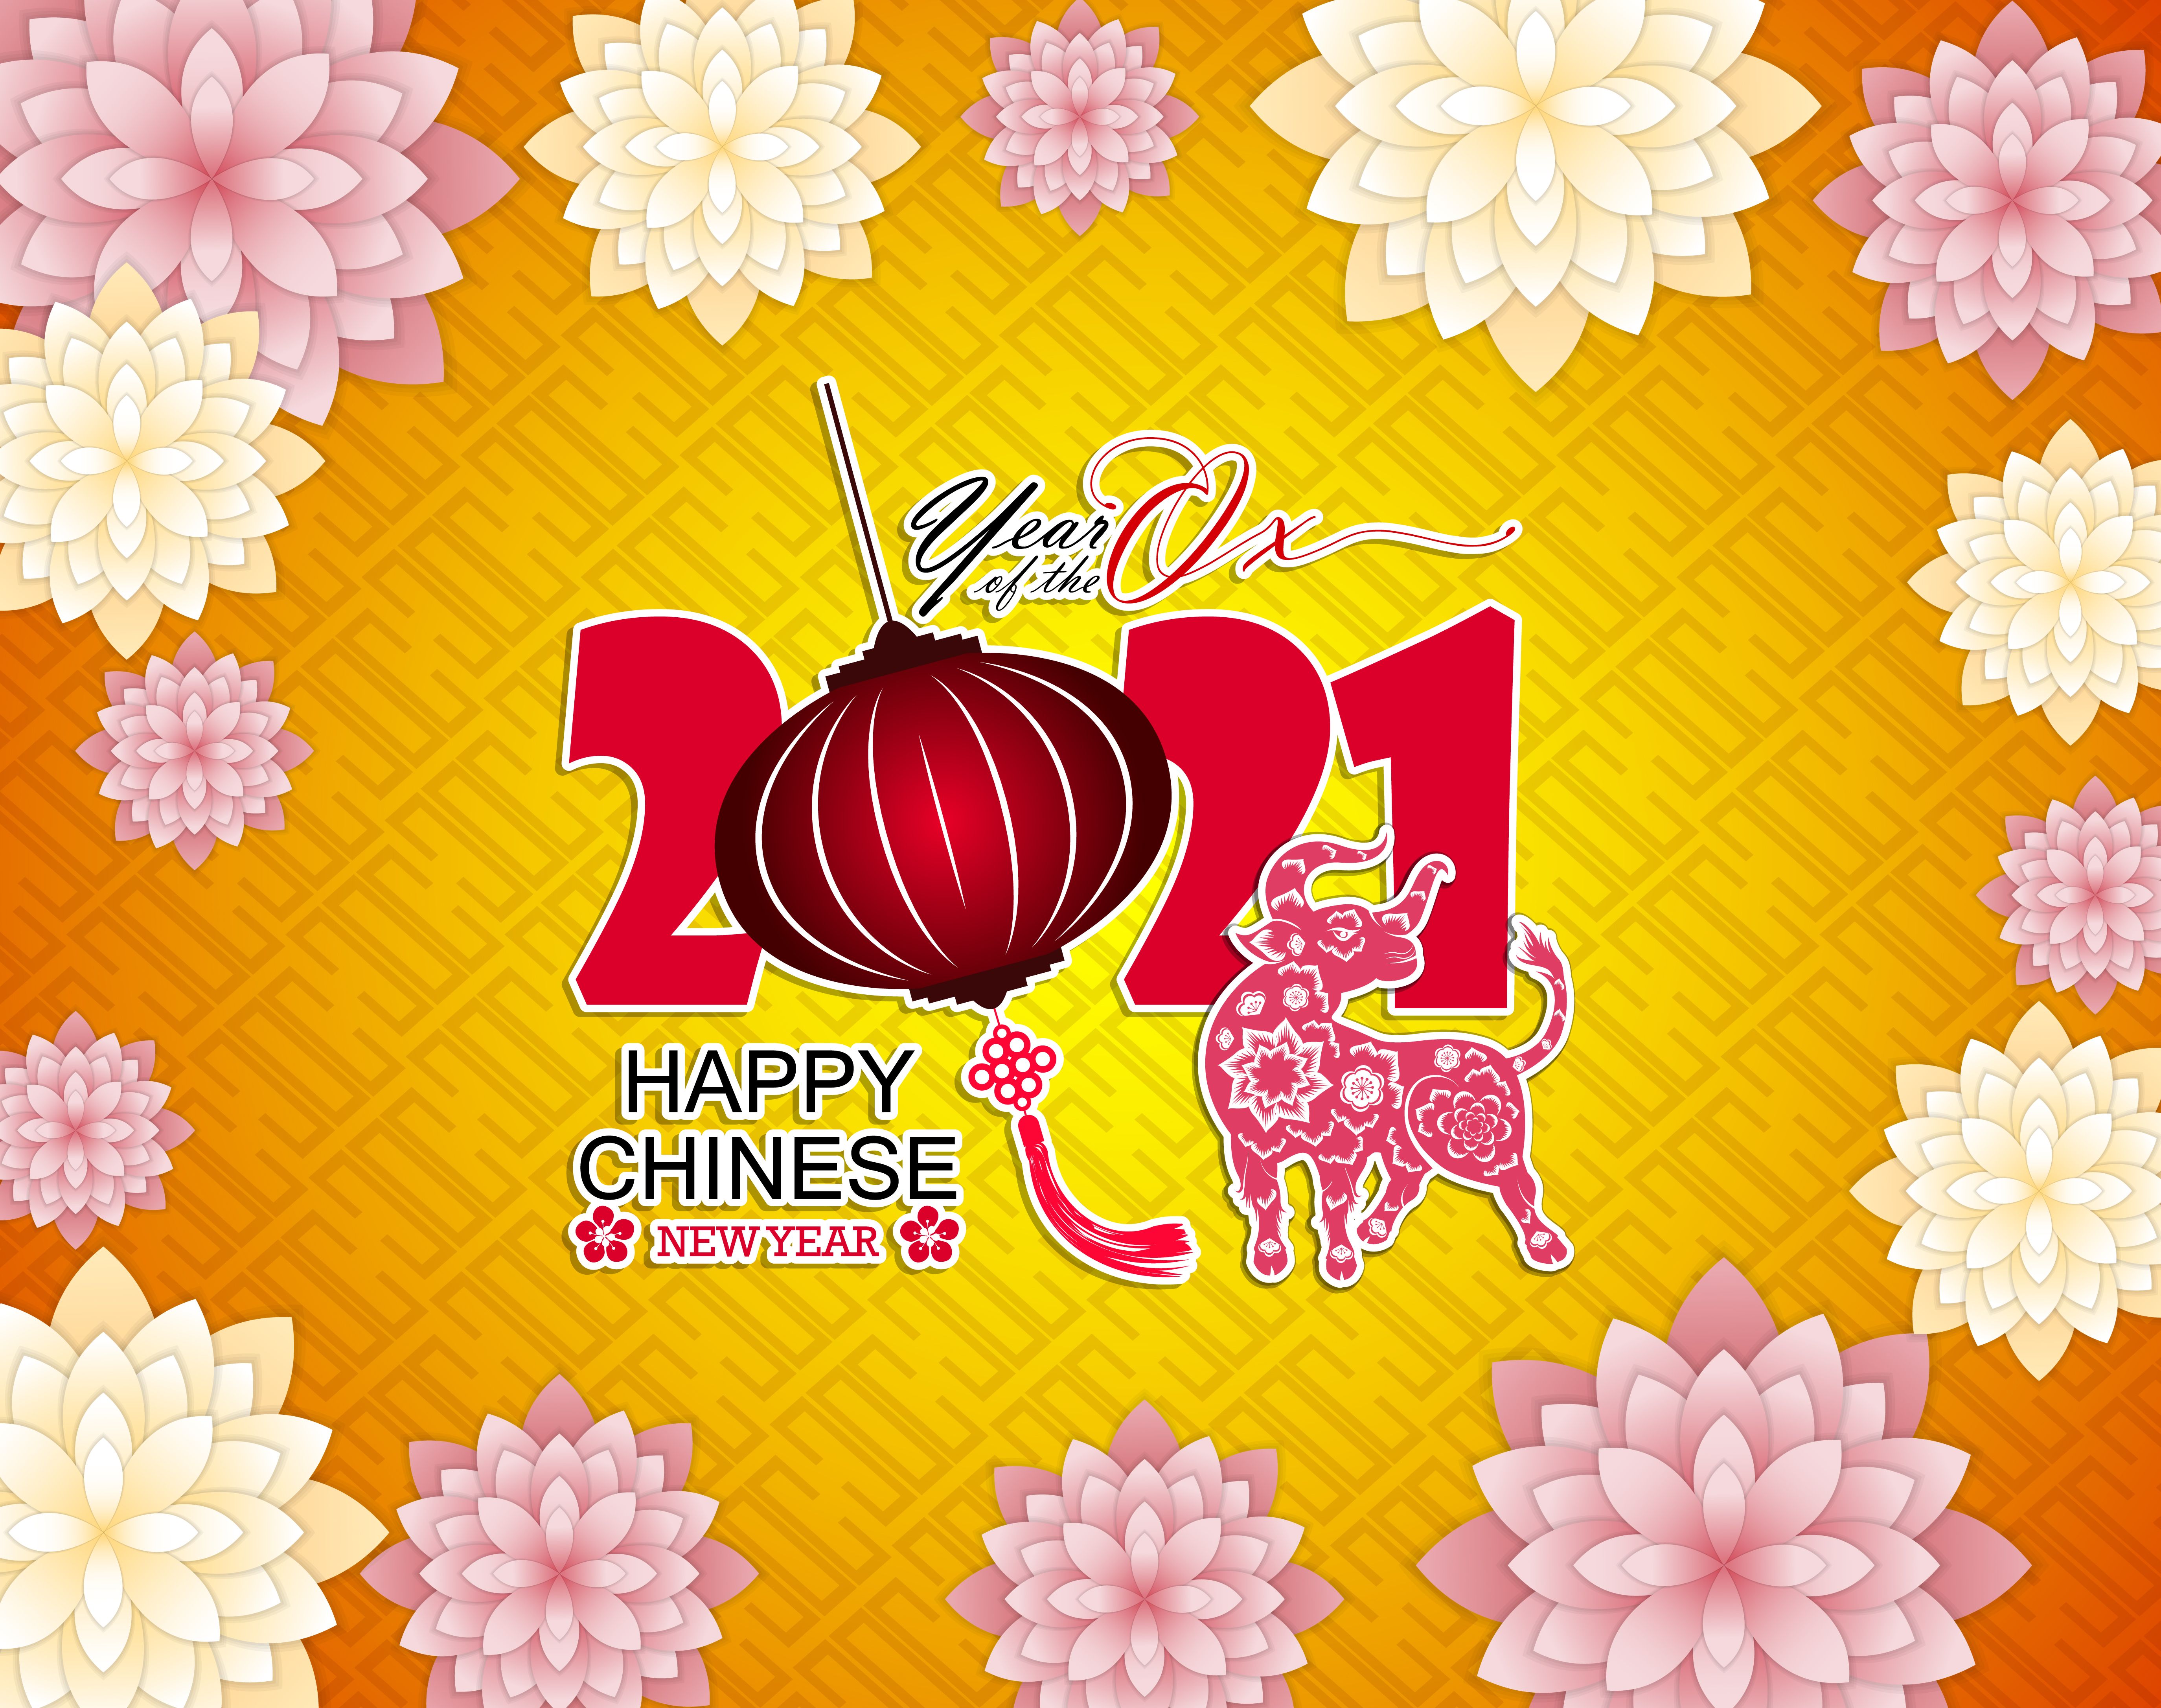 Chinese new year 2021 yellow poster .vecteezy.com